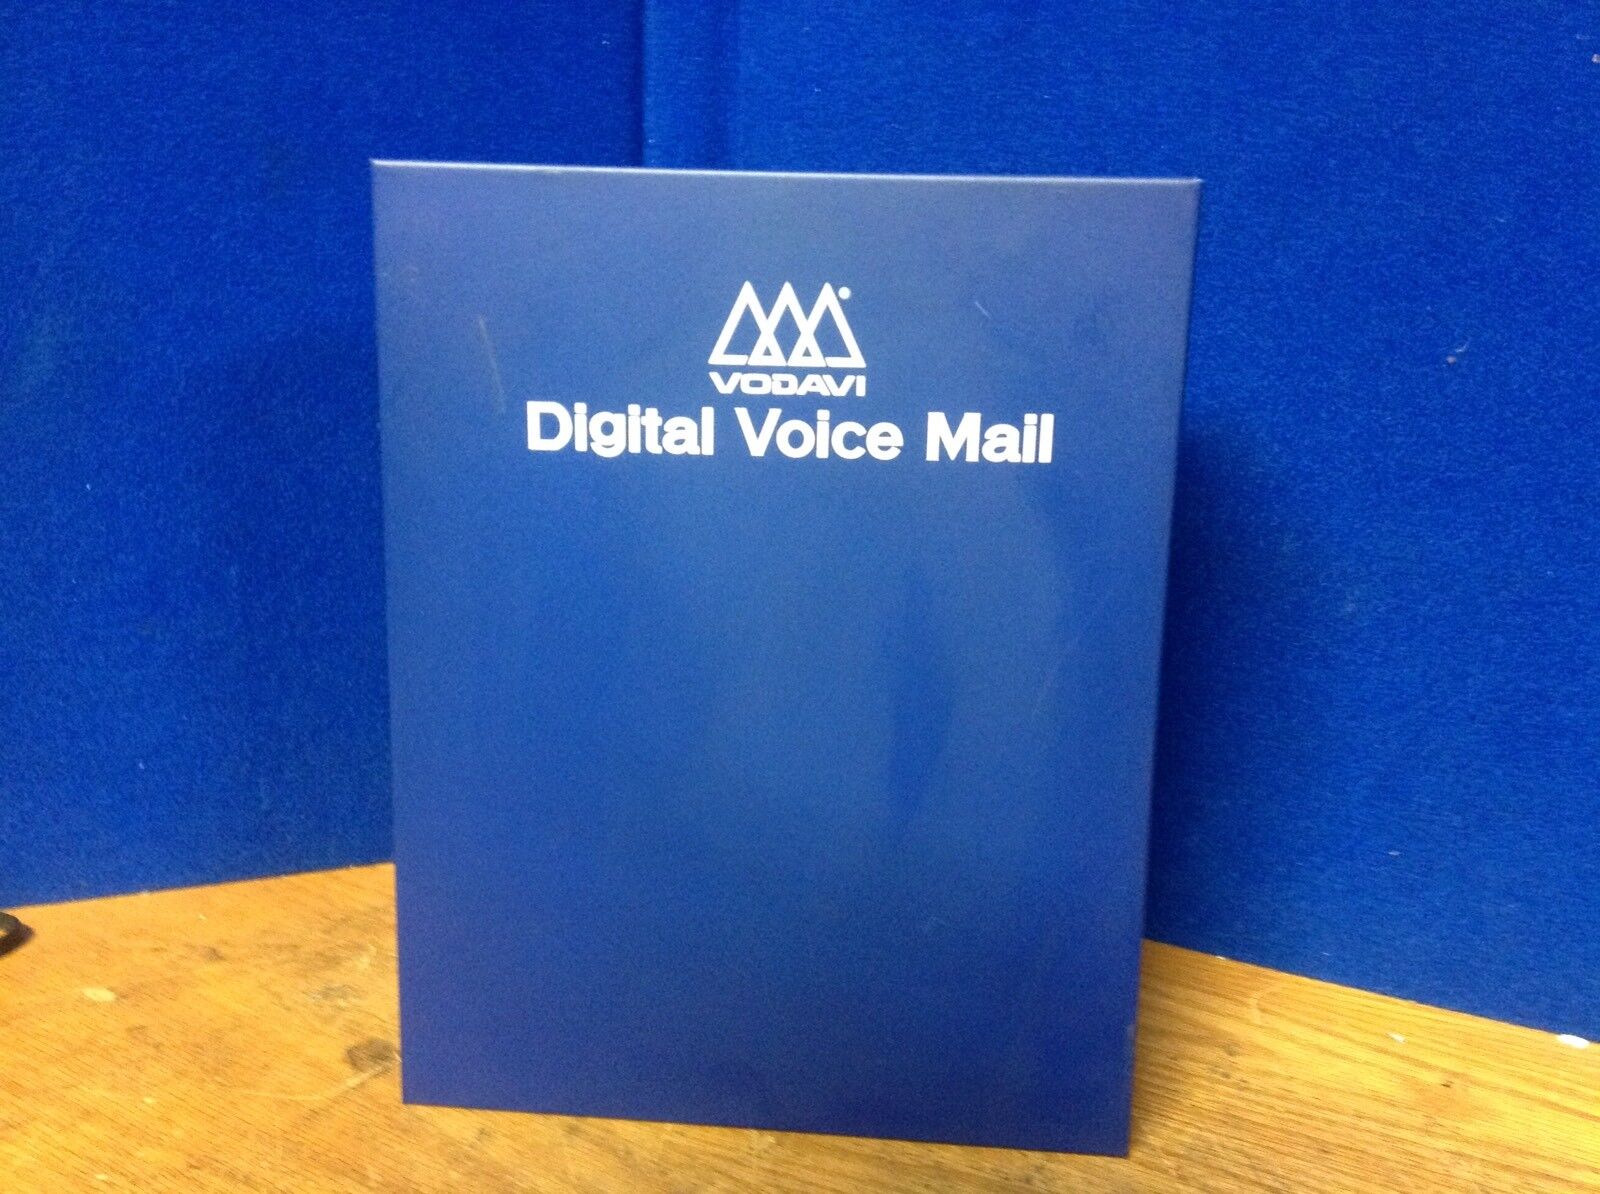 Vodavi Digital Voice Mail DHD-04